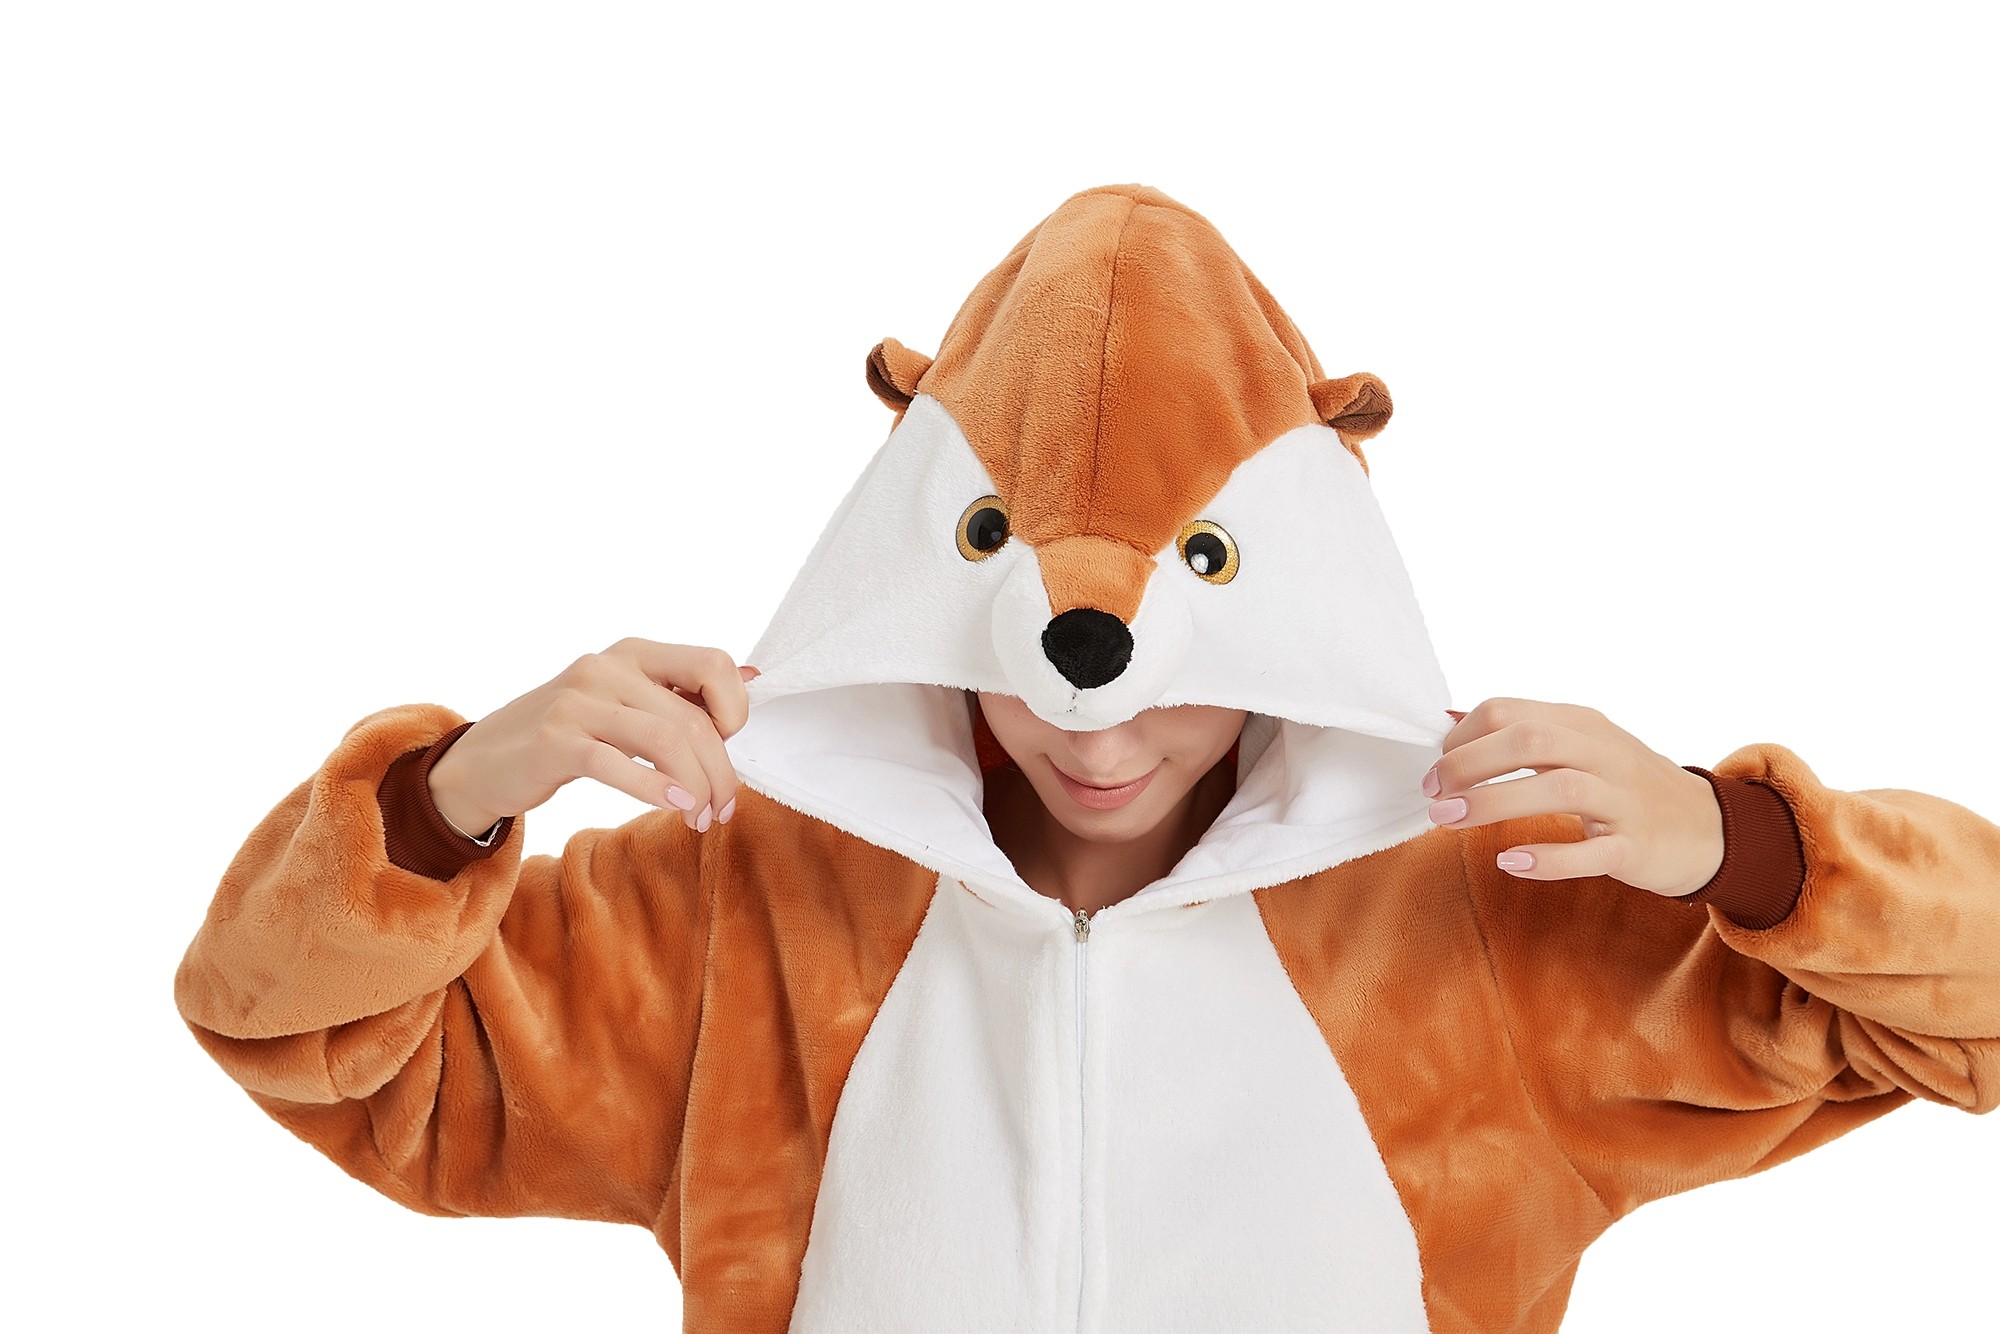 16pcs Animal Onesie Animal Pajamas Halloween Costumes Adult Mongoose Wholesale Price